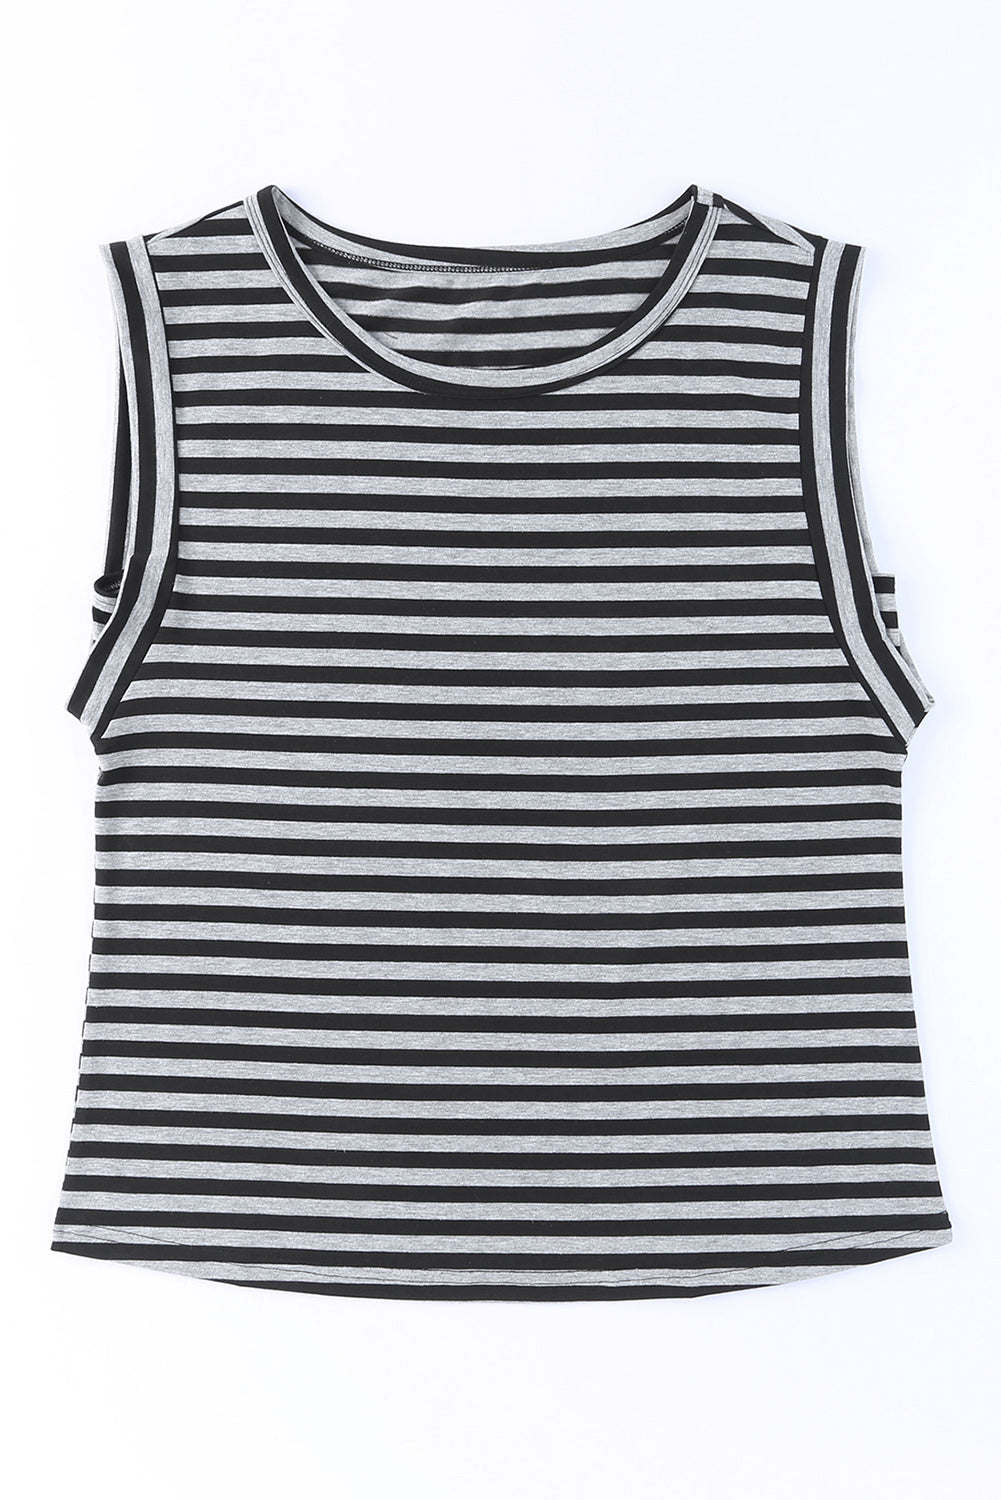 Black Striped Summer Top Casual Sleeveless T Shirt for Women